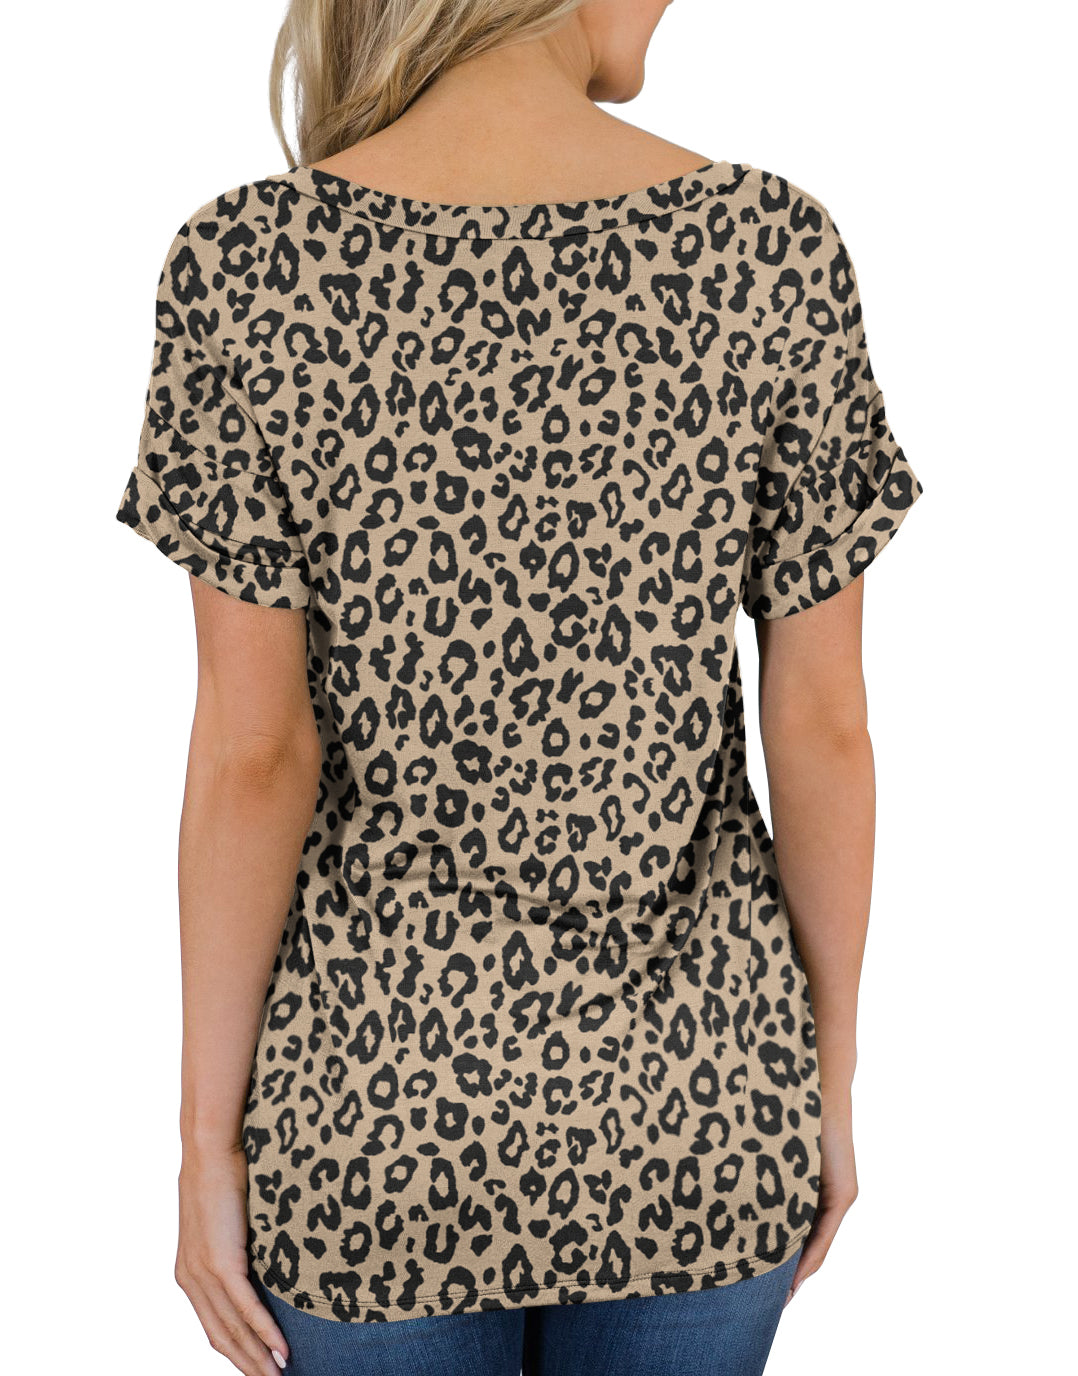 JWD Women's Casual Tops Short Sleeve V-Neck Shirts Leopard Print Loose Blouse Basic Tee T-Shirt